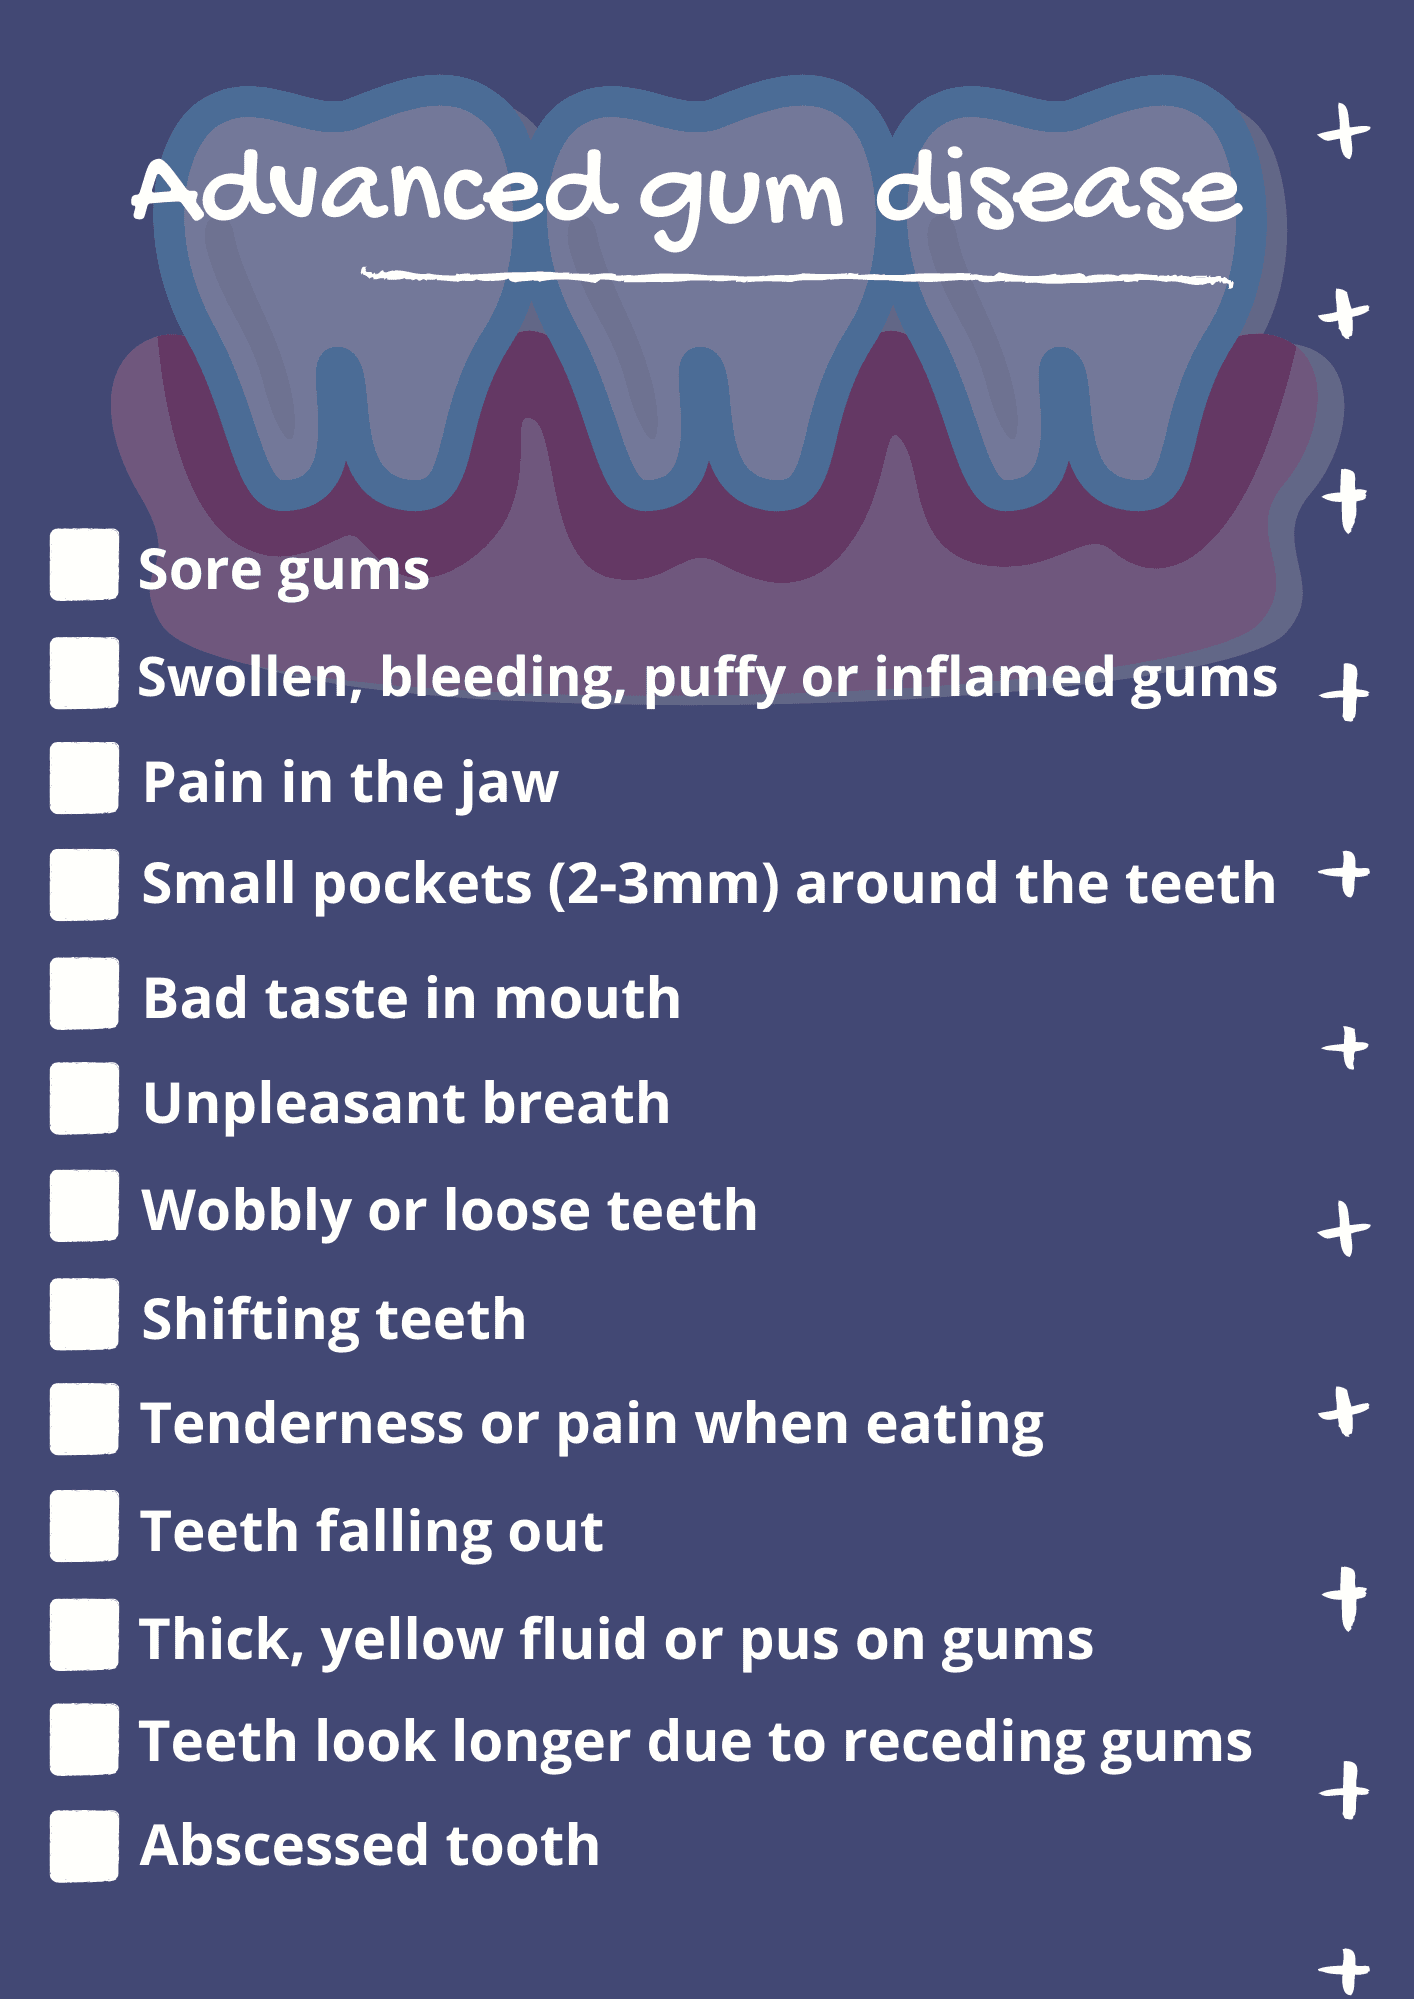 signs of periodontitis advanced gum disease